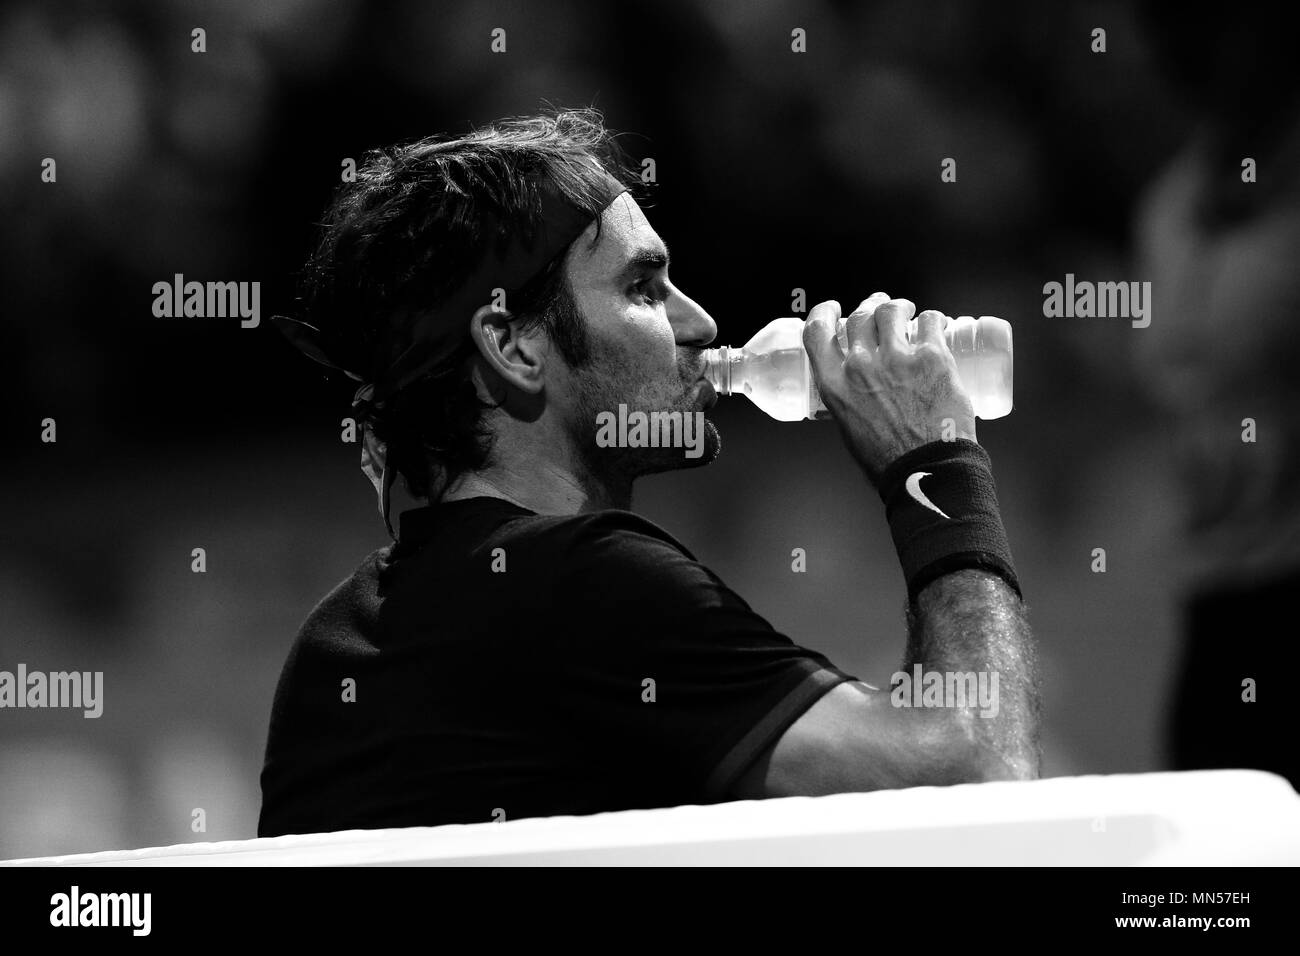 Roger Federer vs Kei Nishikori during Day 4 of the 2015 Barclays ATP World Tour Finals - O2 Arena London England. 19 November 2015 Stock Photo